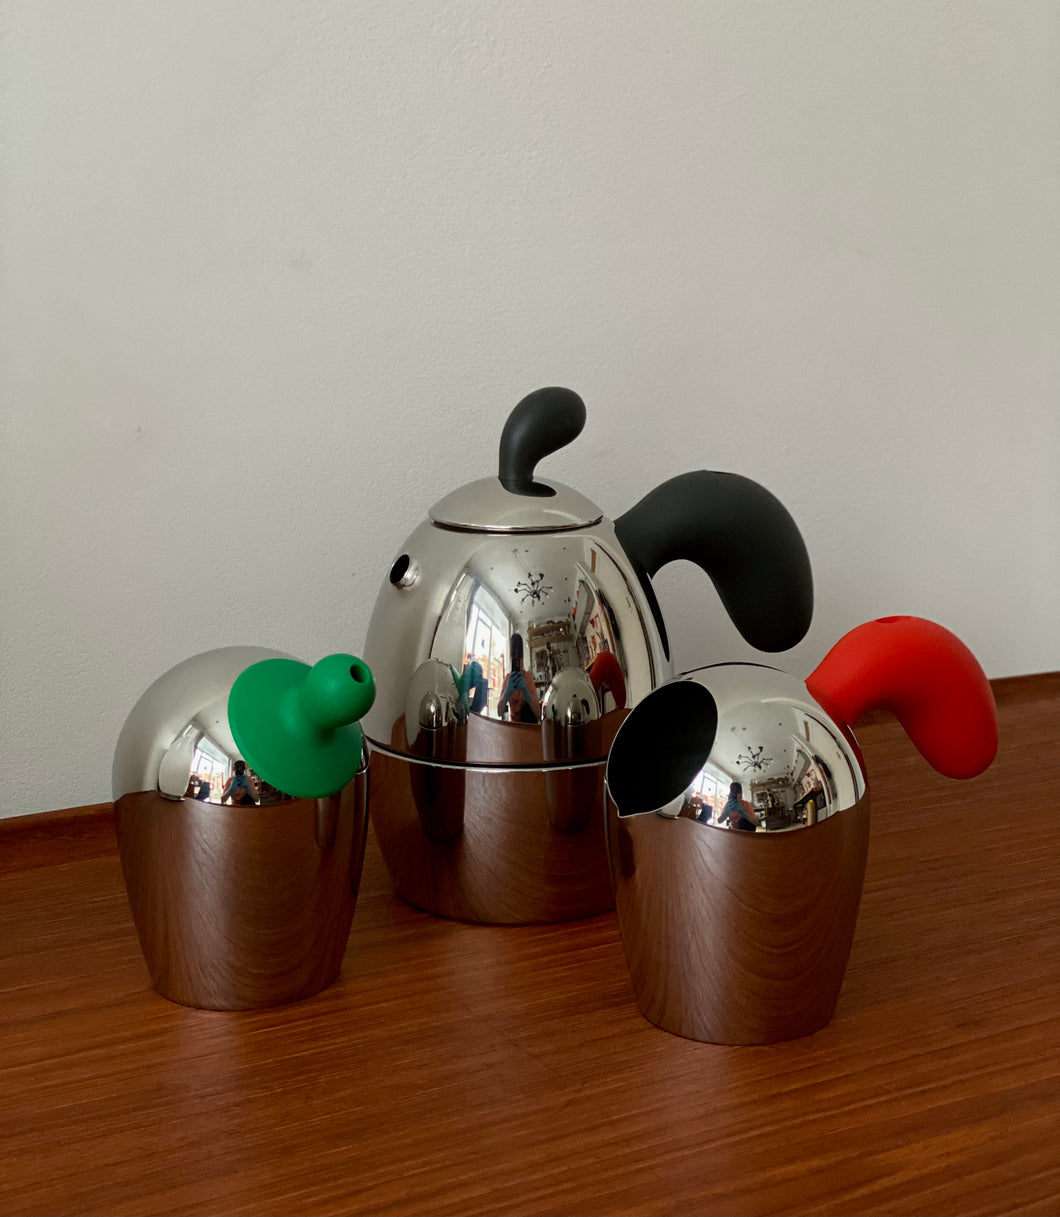 Espresso maker, sugar jug and creamer set by Alessi